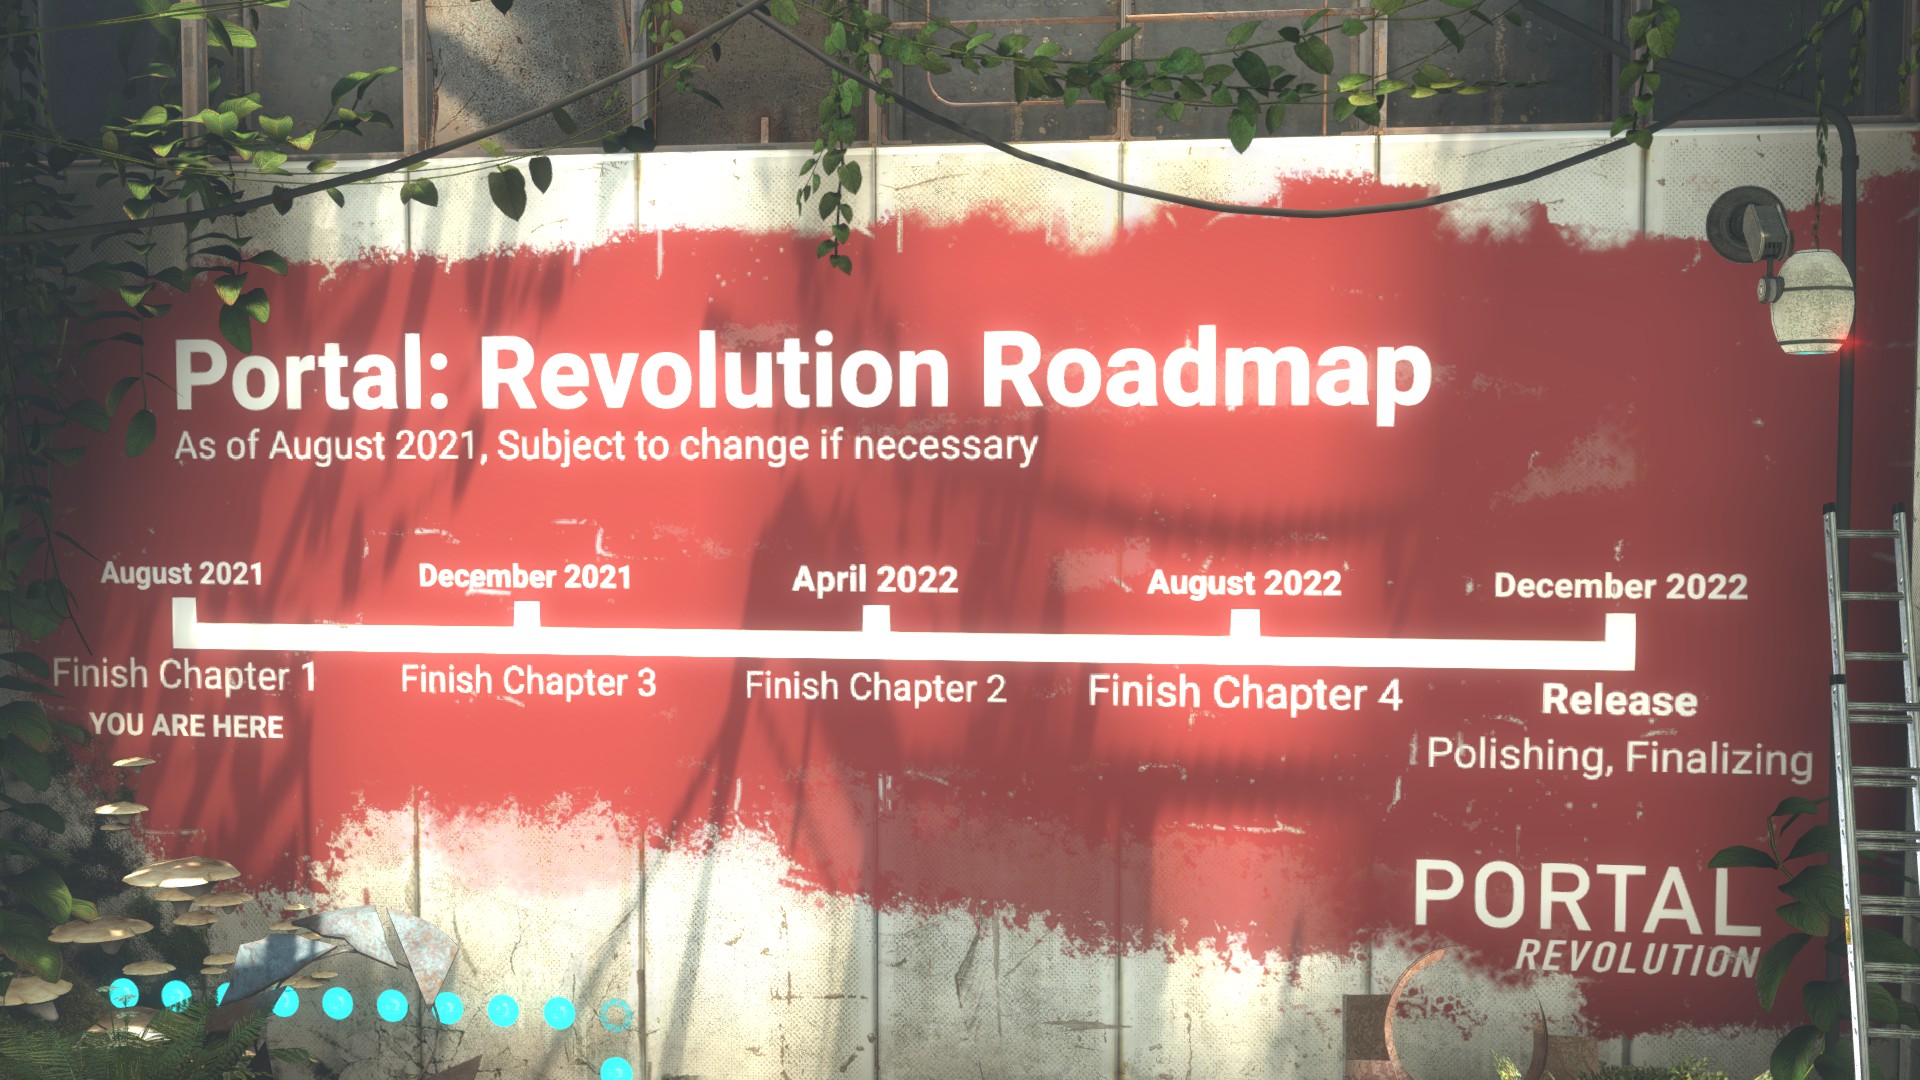 Portal: Revolution Roadmap as of August 2021